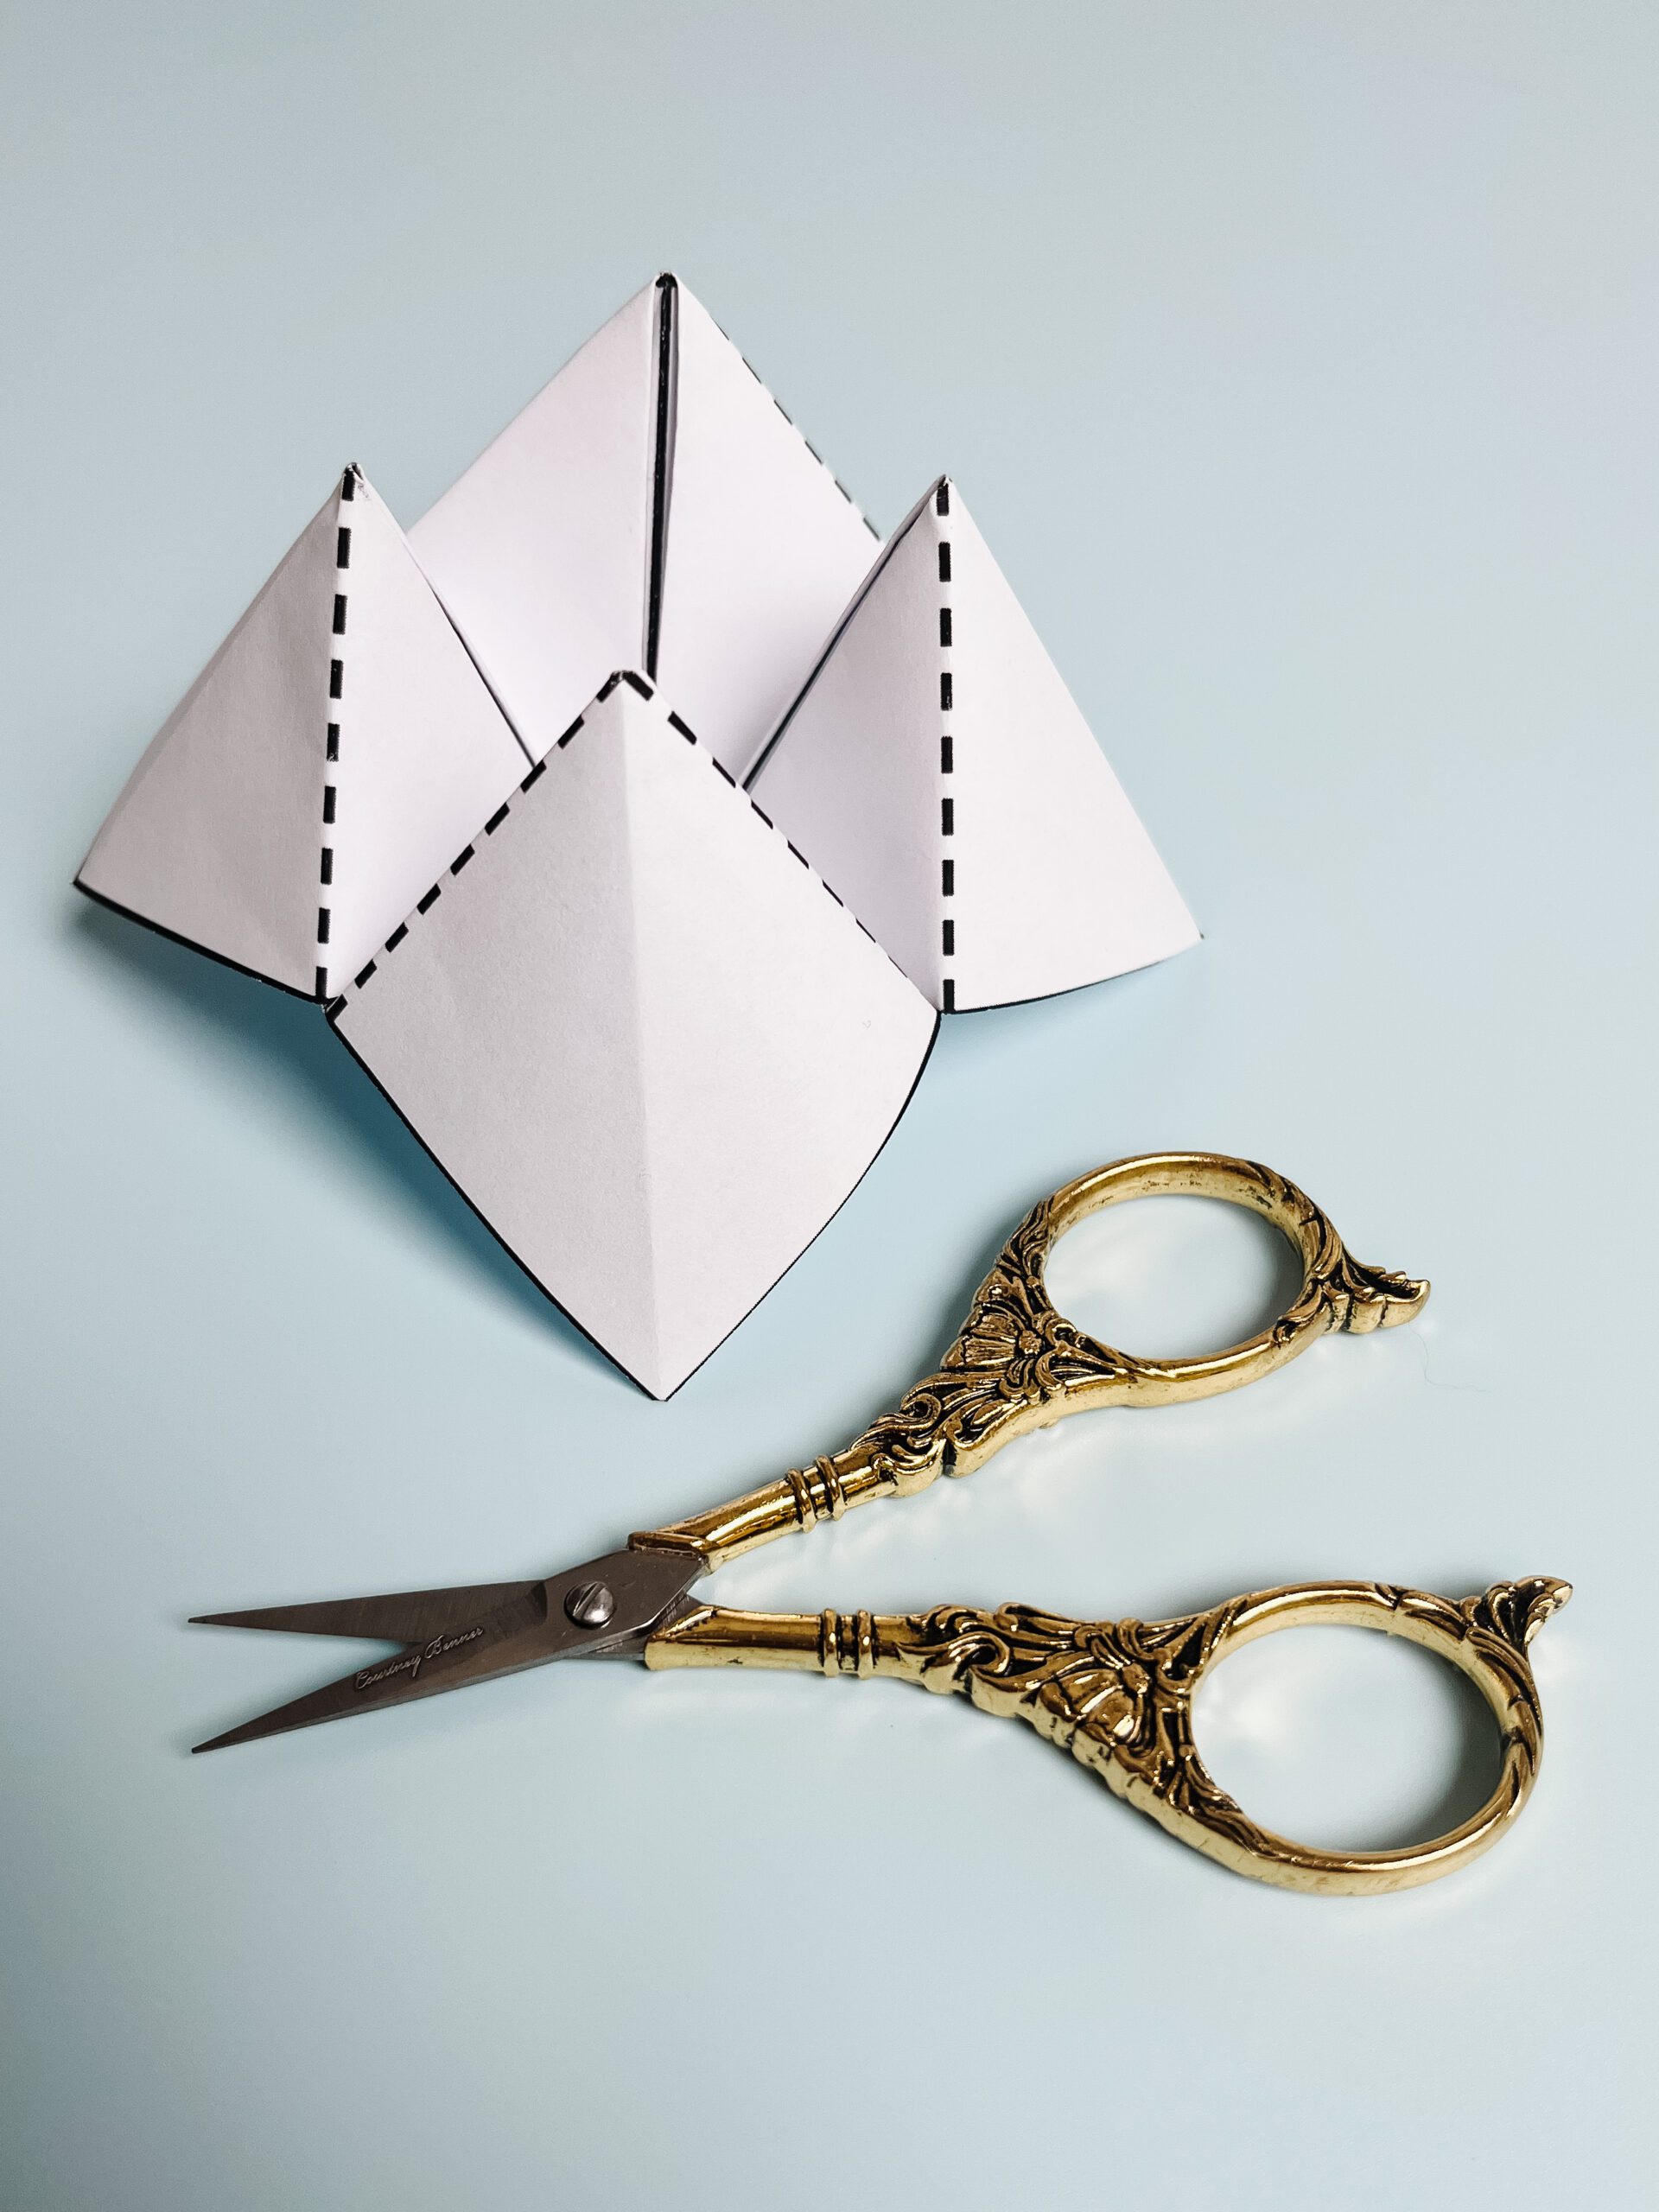 cootie catcher origami